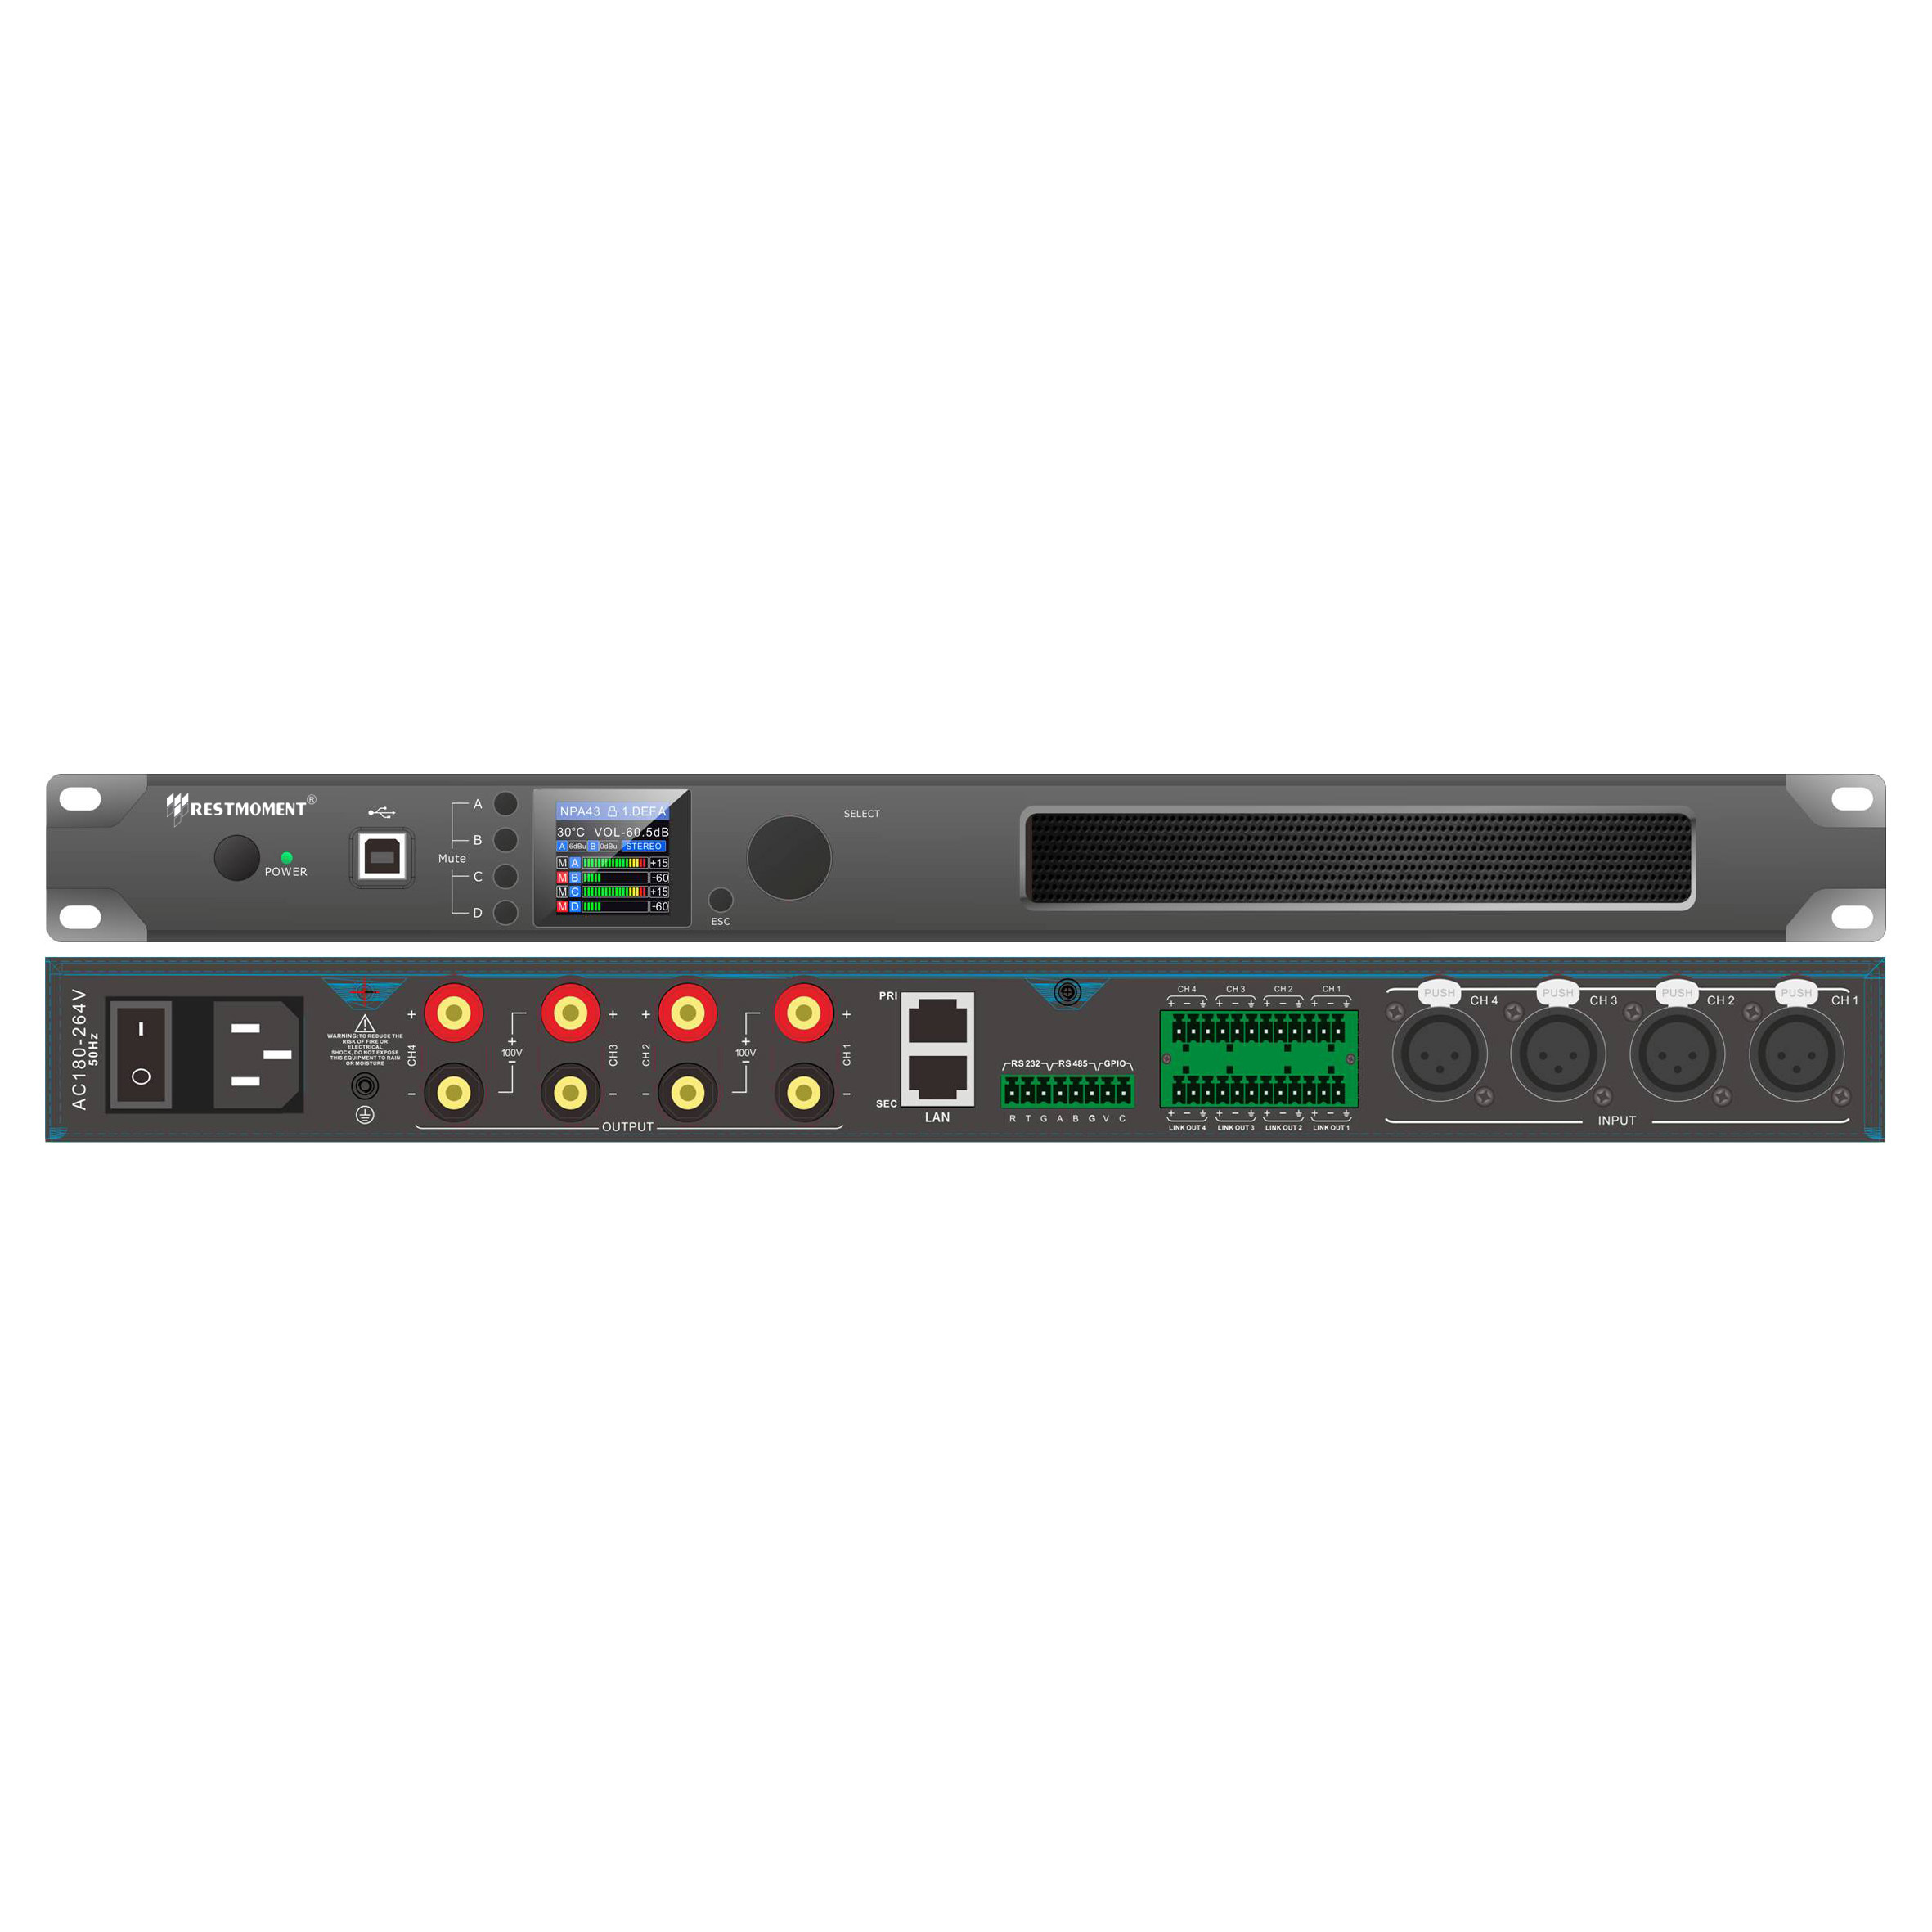 Network digital amplifier RX-KS4300/RX-KSD4300